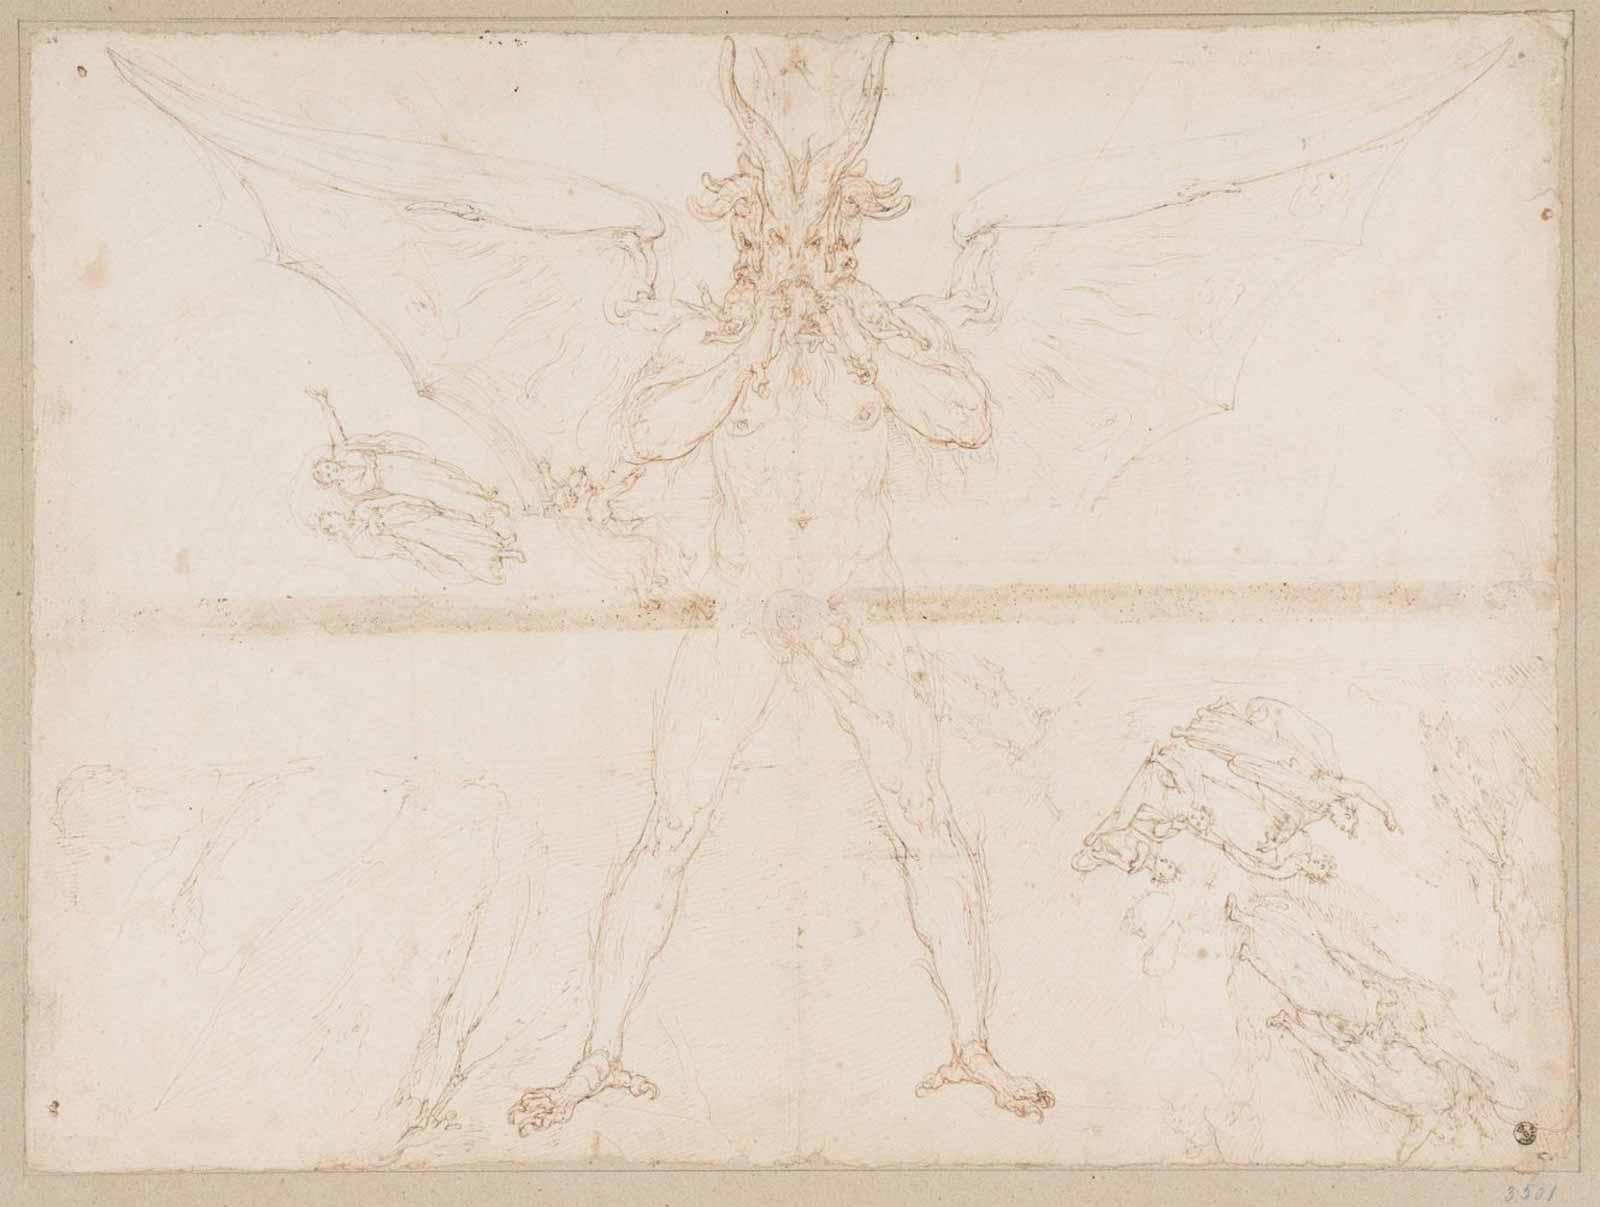 Frederico Zuccari, Sketches for Three Headed Lucifer